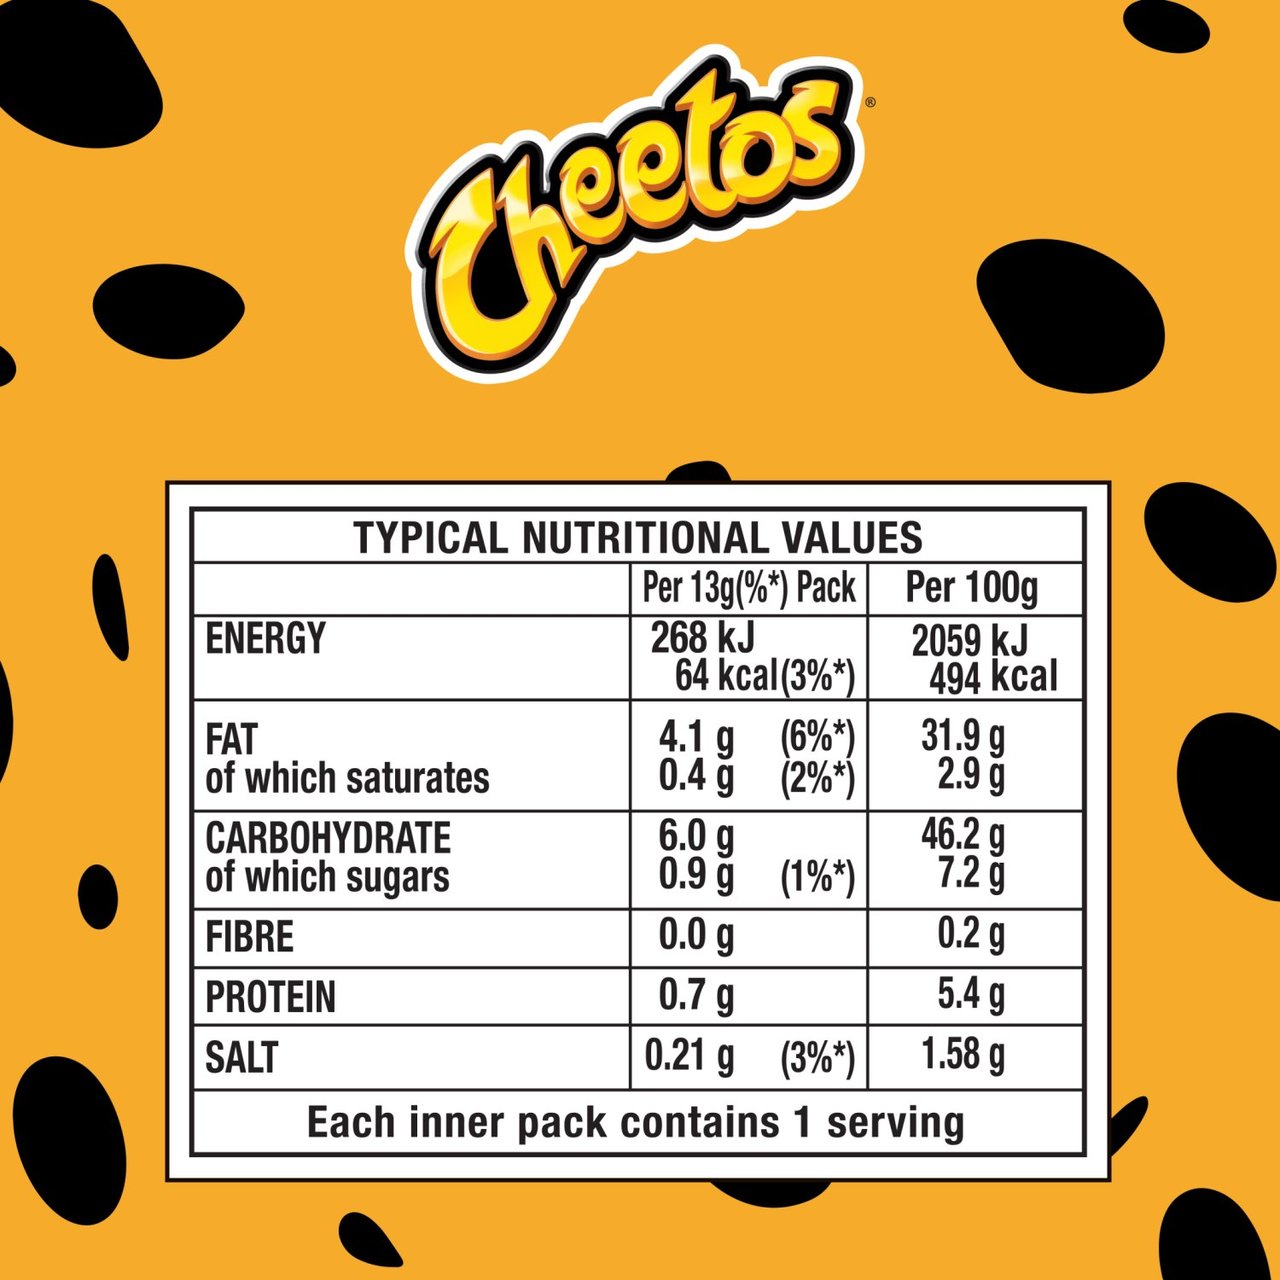 Cheetos Puffs Cheese Multipack Snacks 6 x 13g